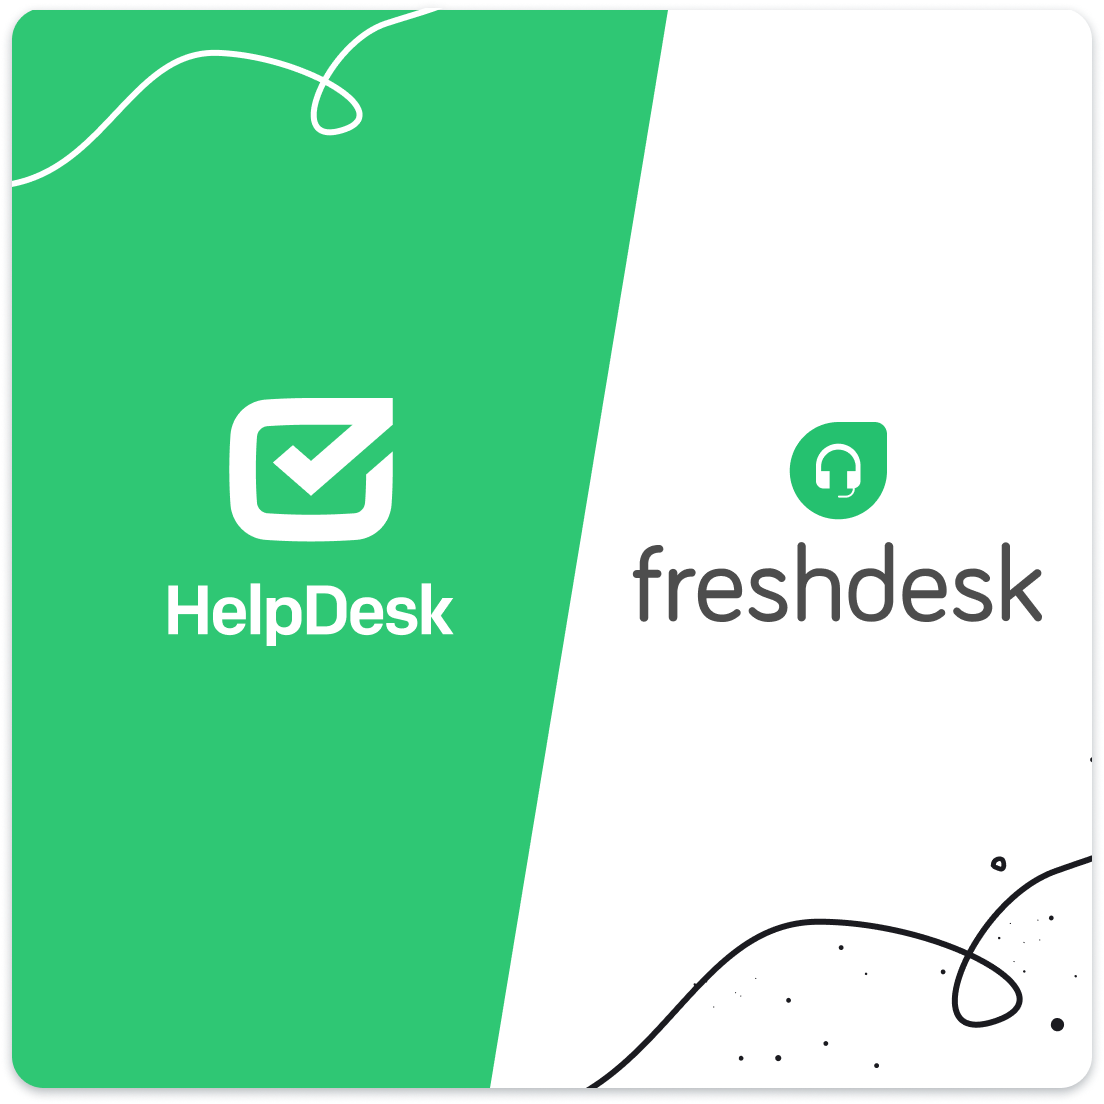 HelpDesk and Freshdesk logos.